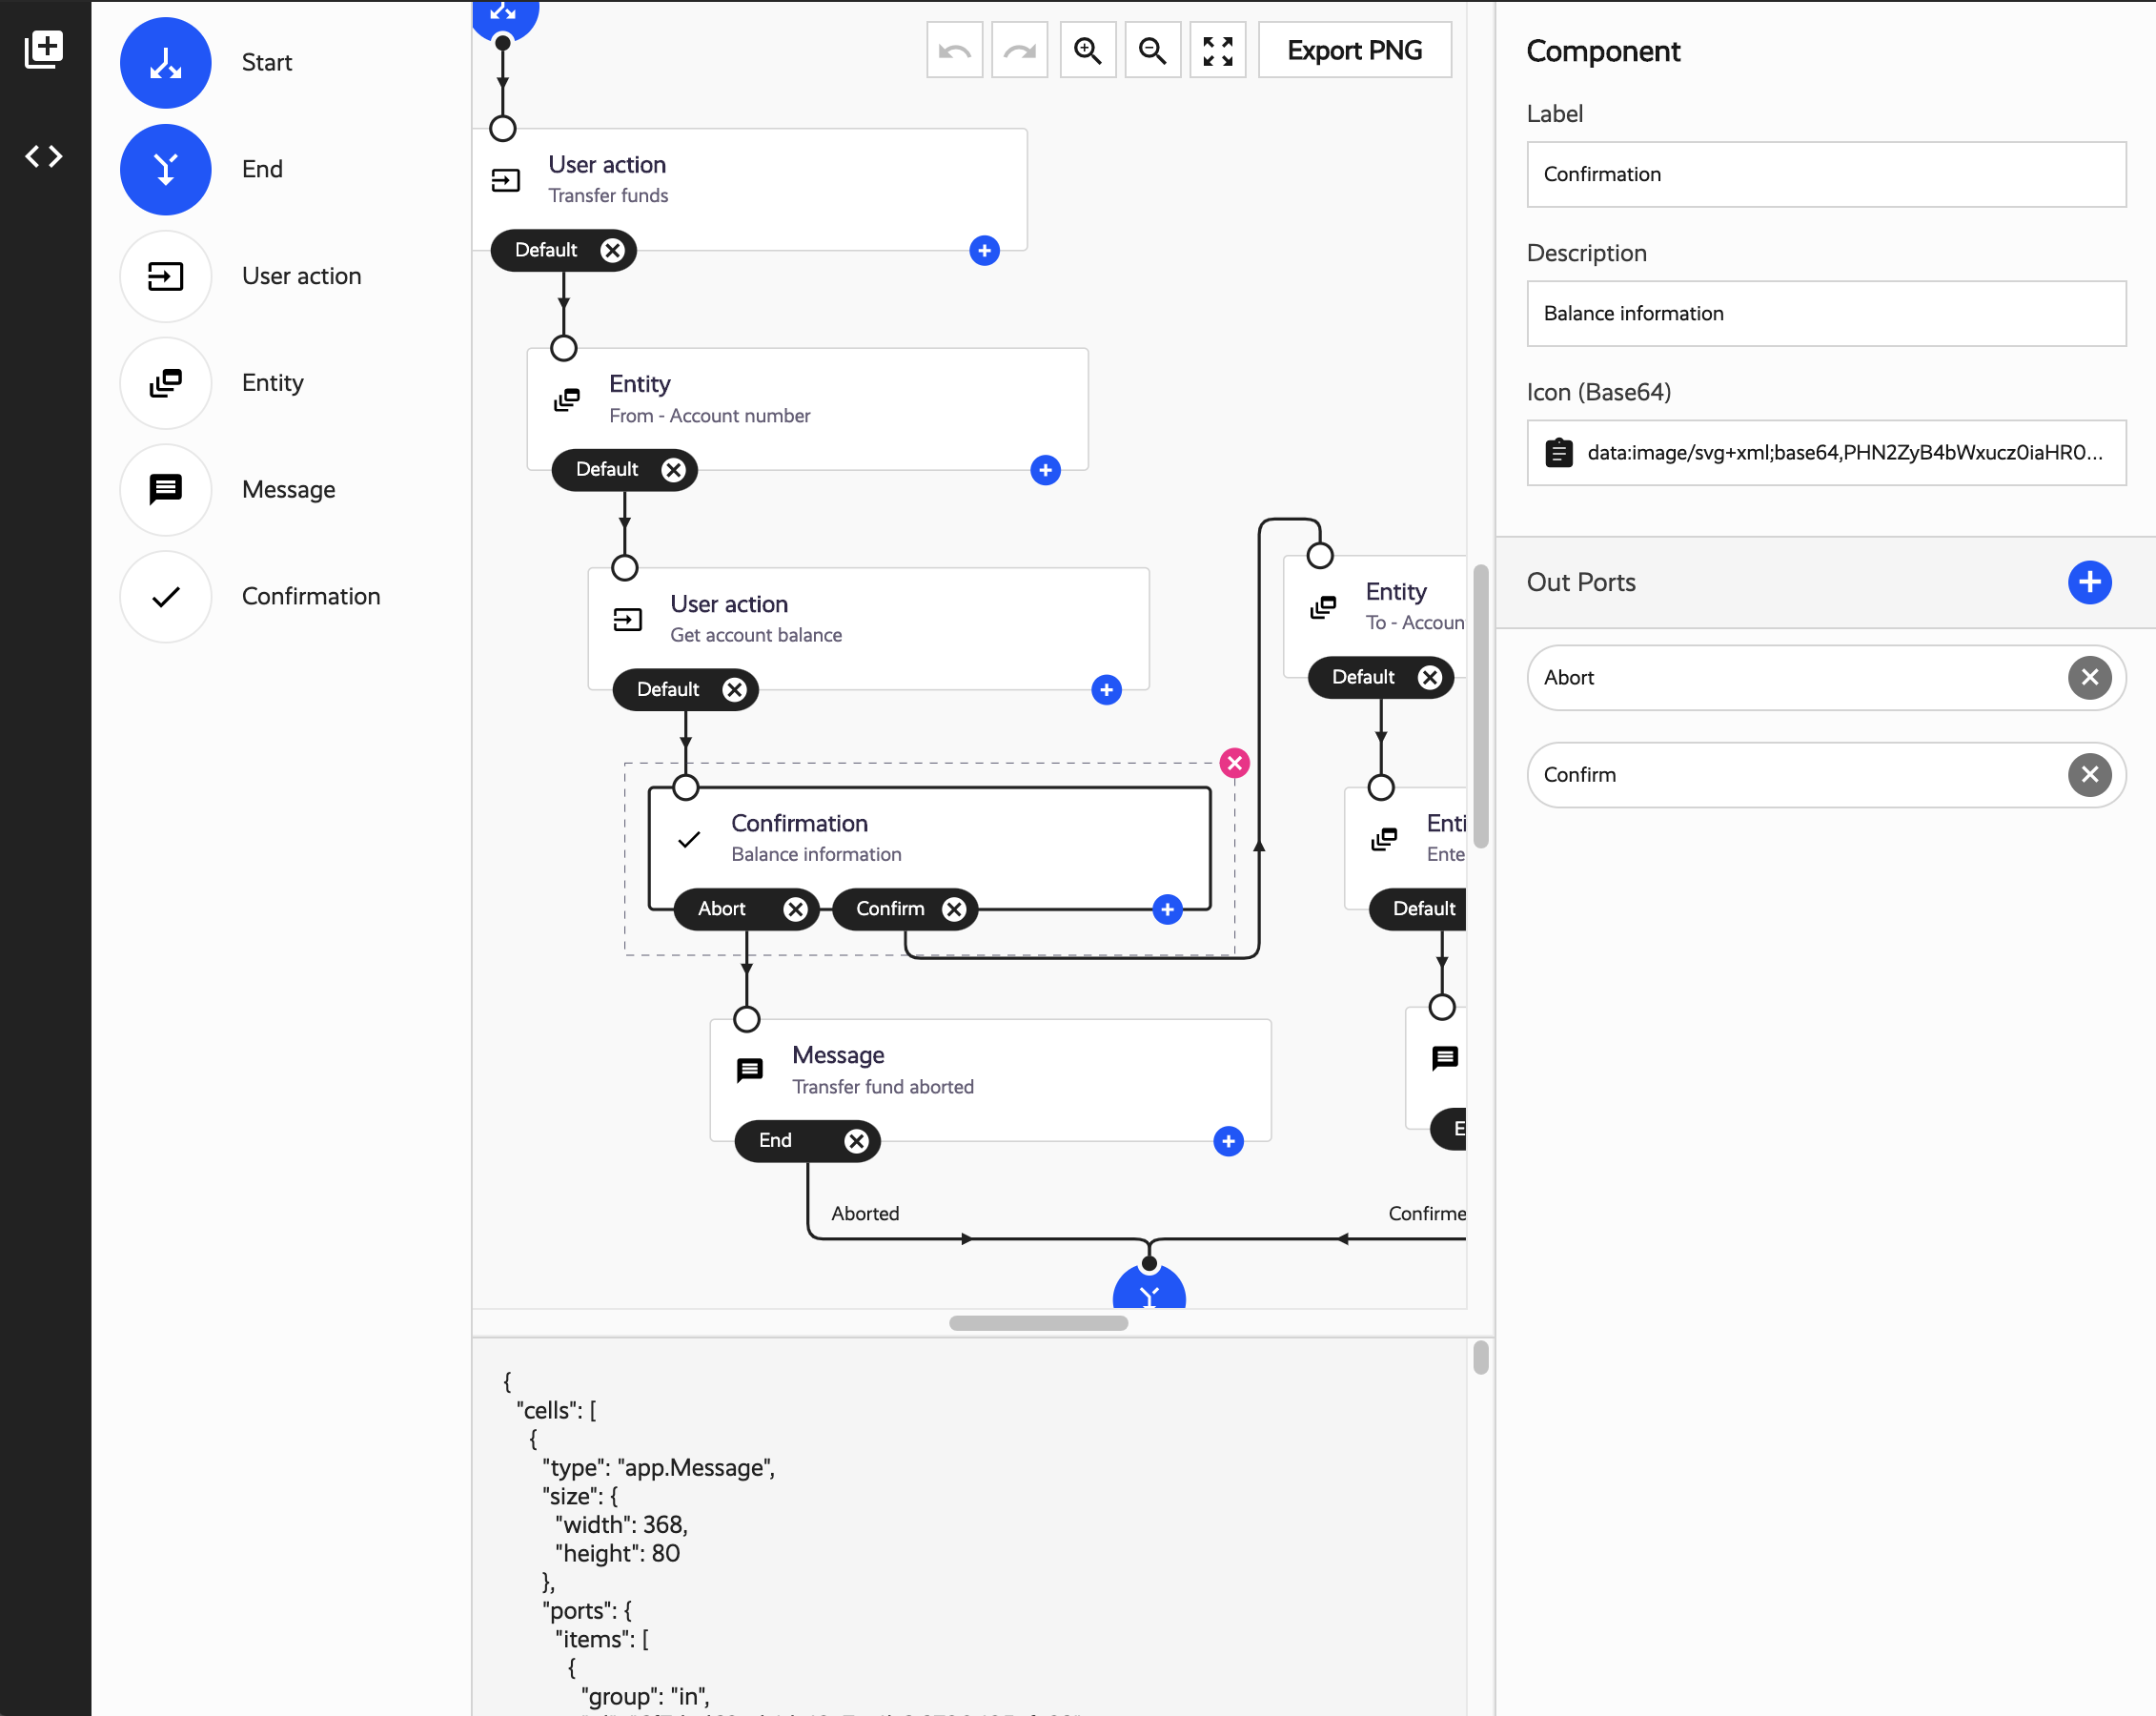 Rappid diagramming toolkit: Chatbot demo